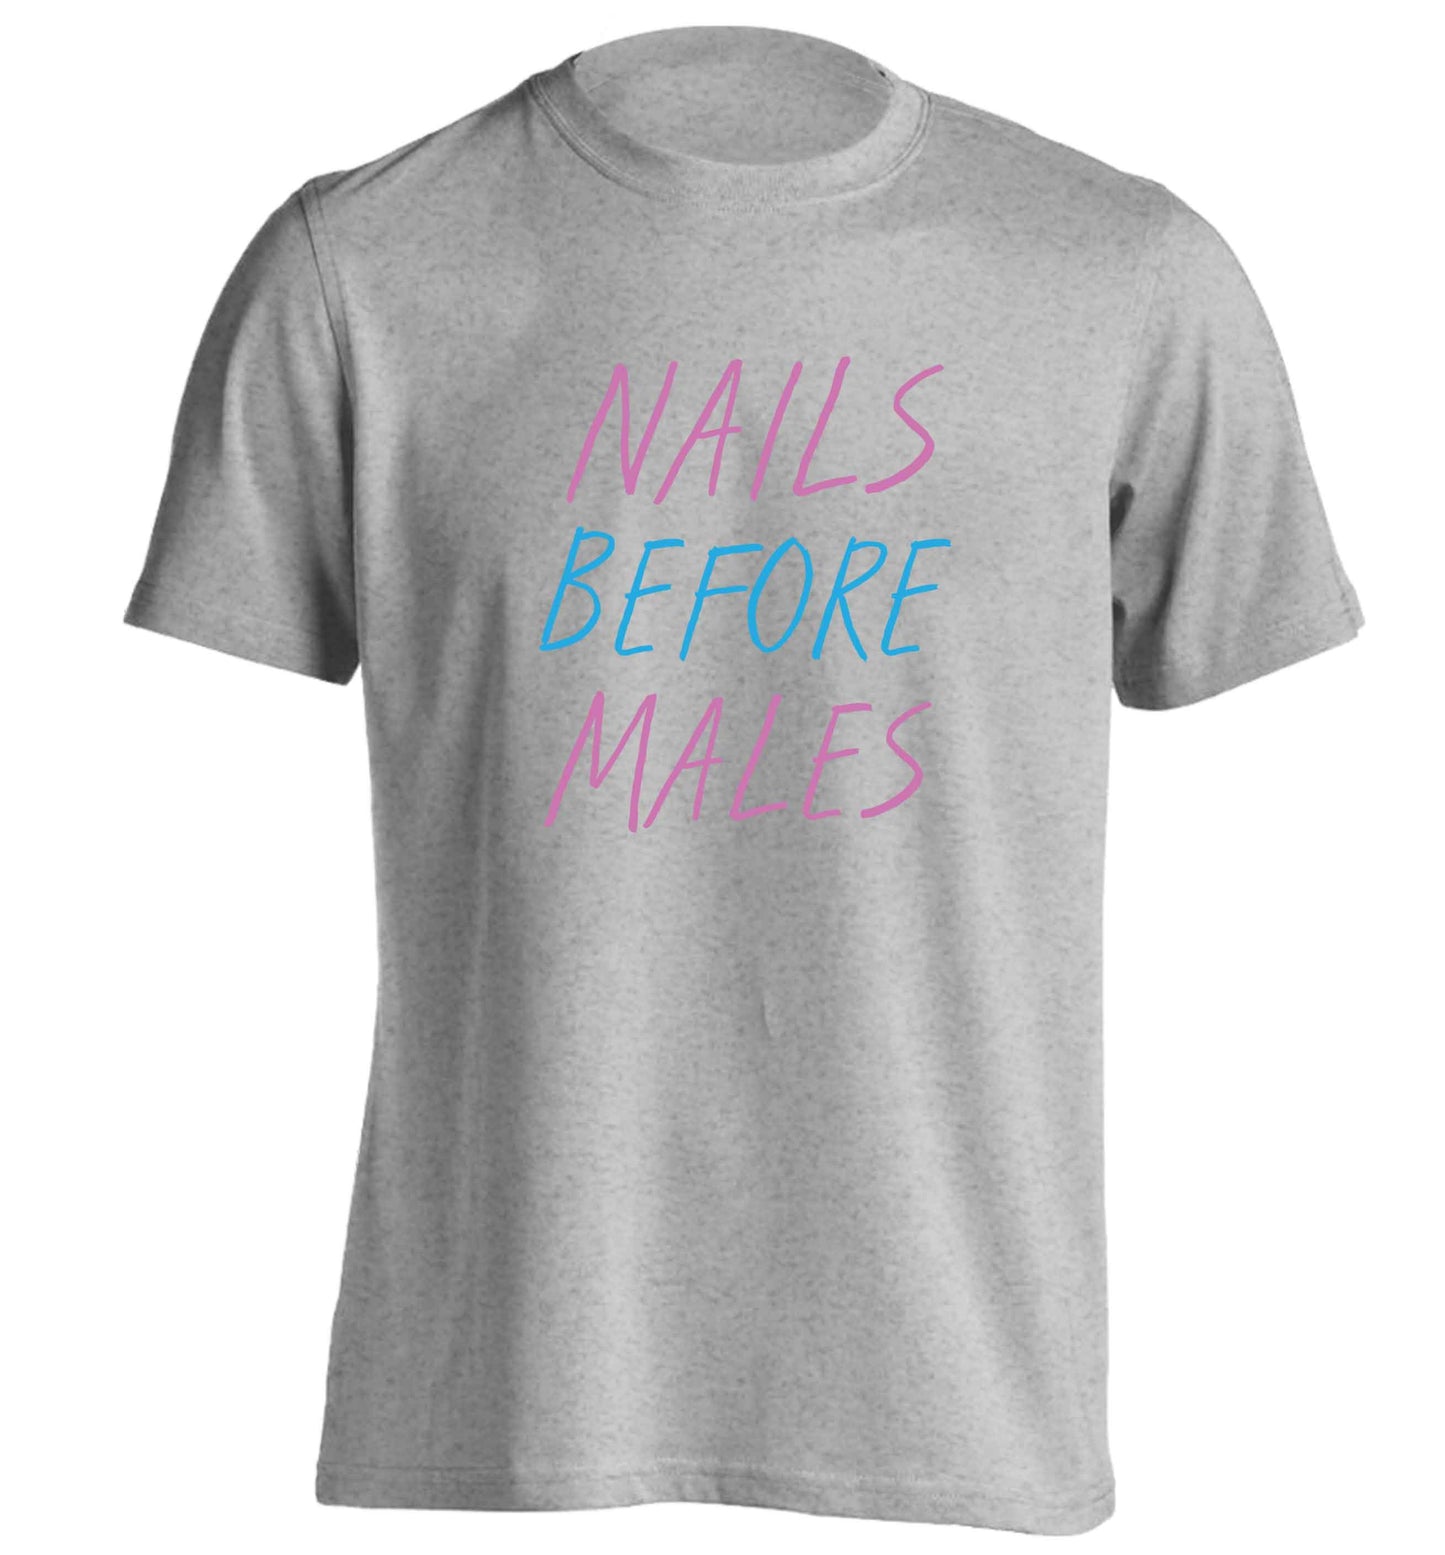 Nails before males adults unisex grey Tshirt 2XL